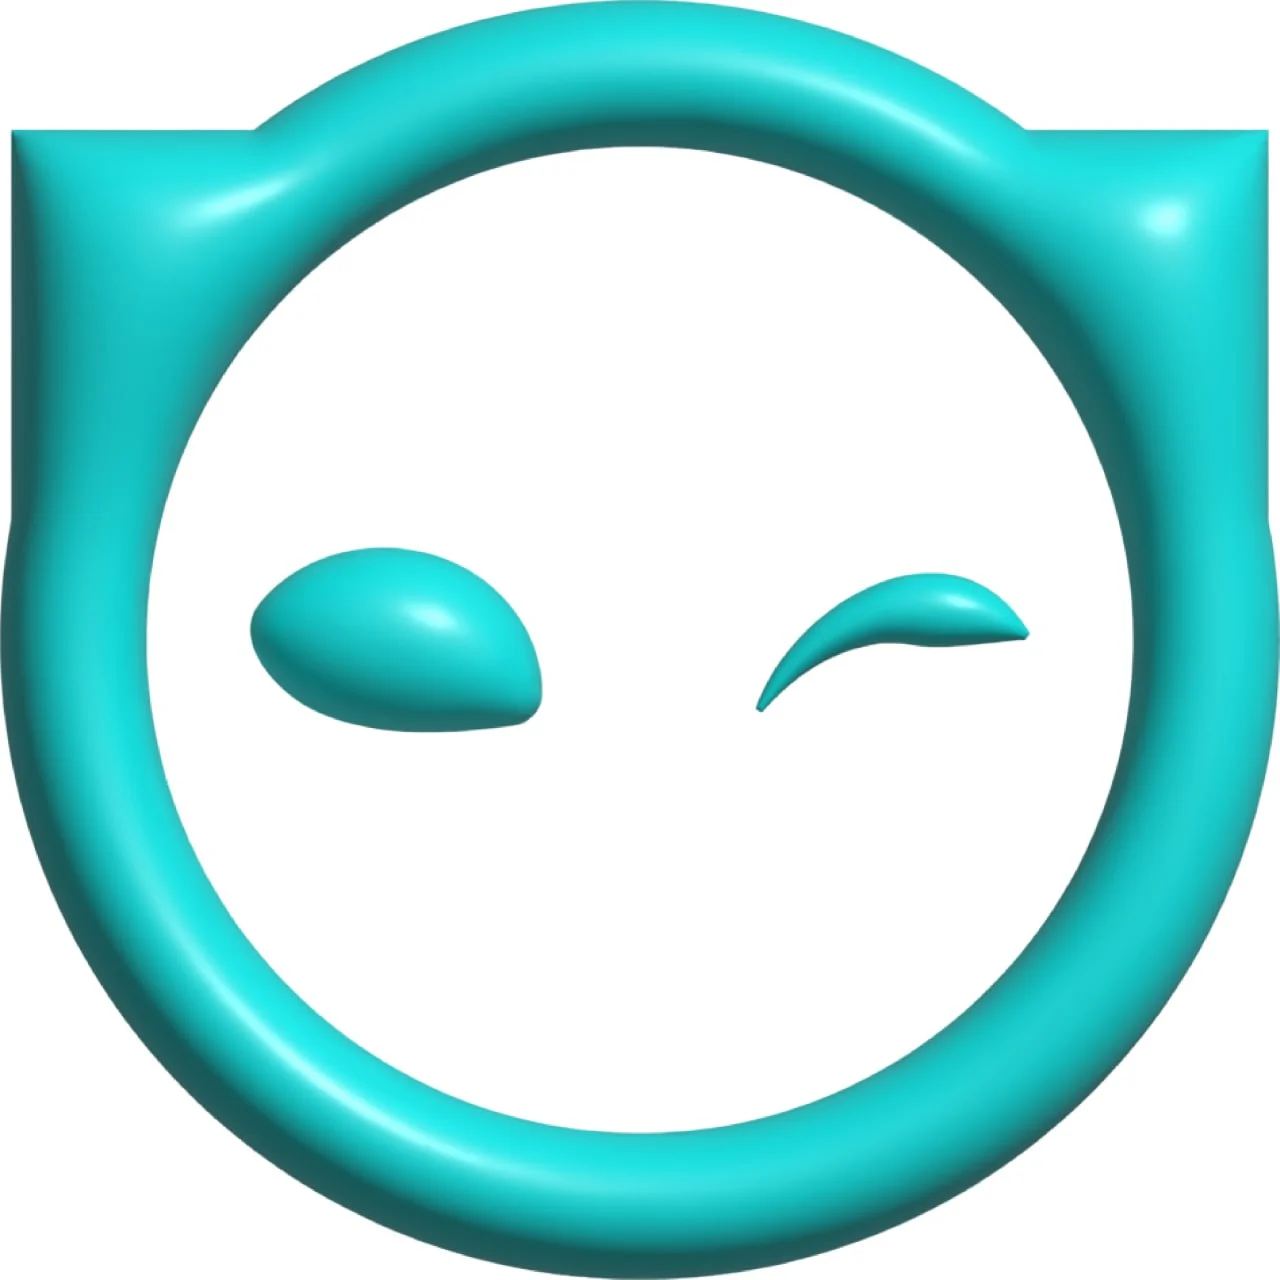 WINK logo